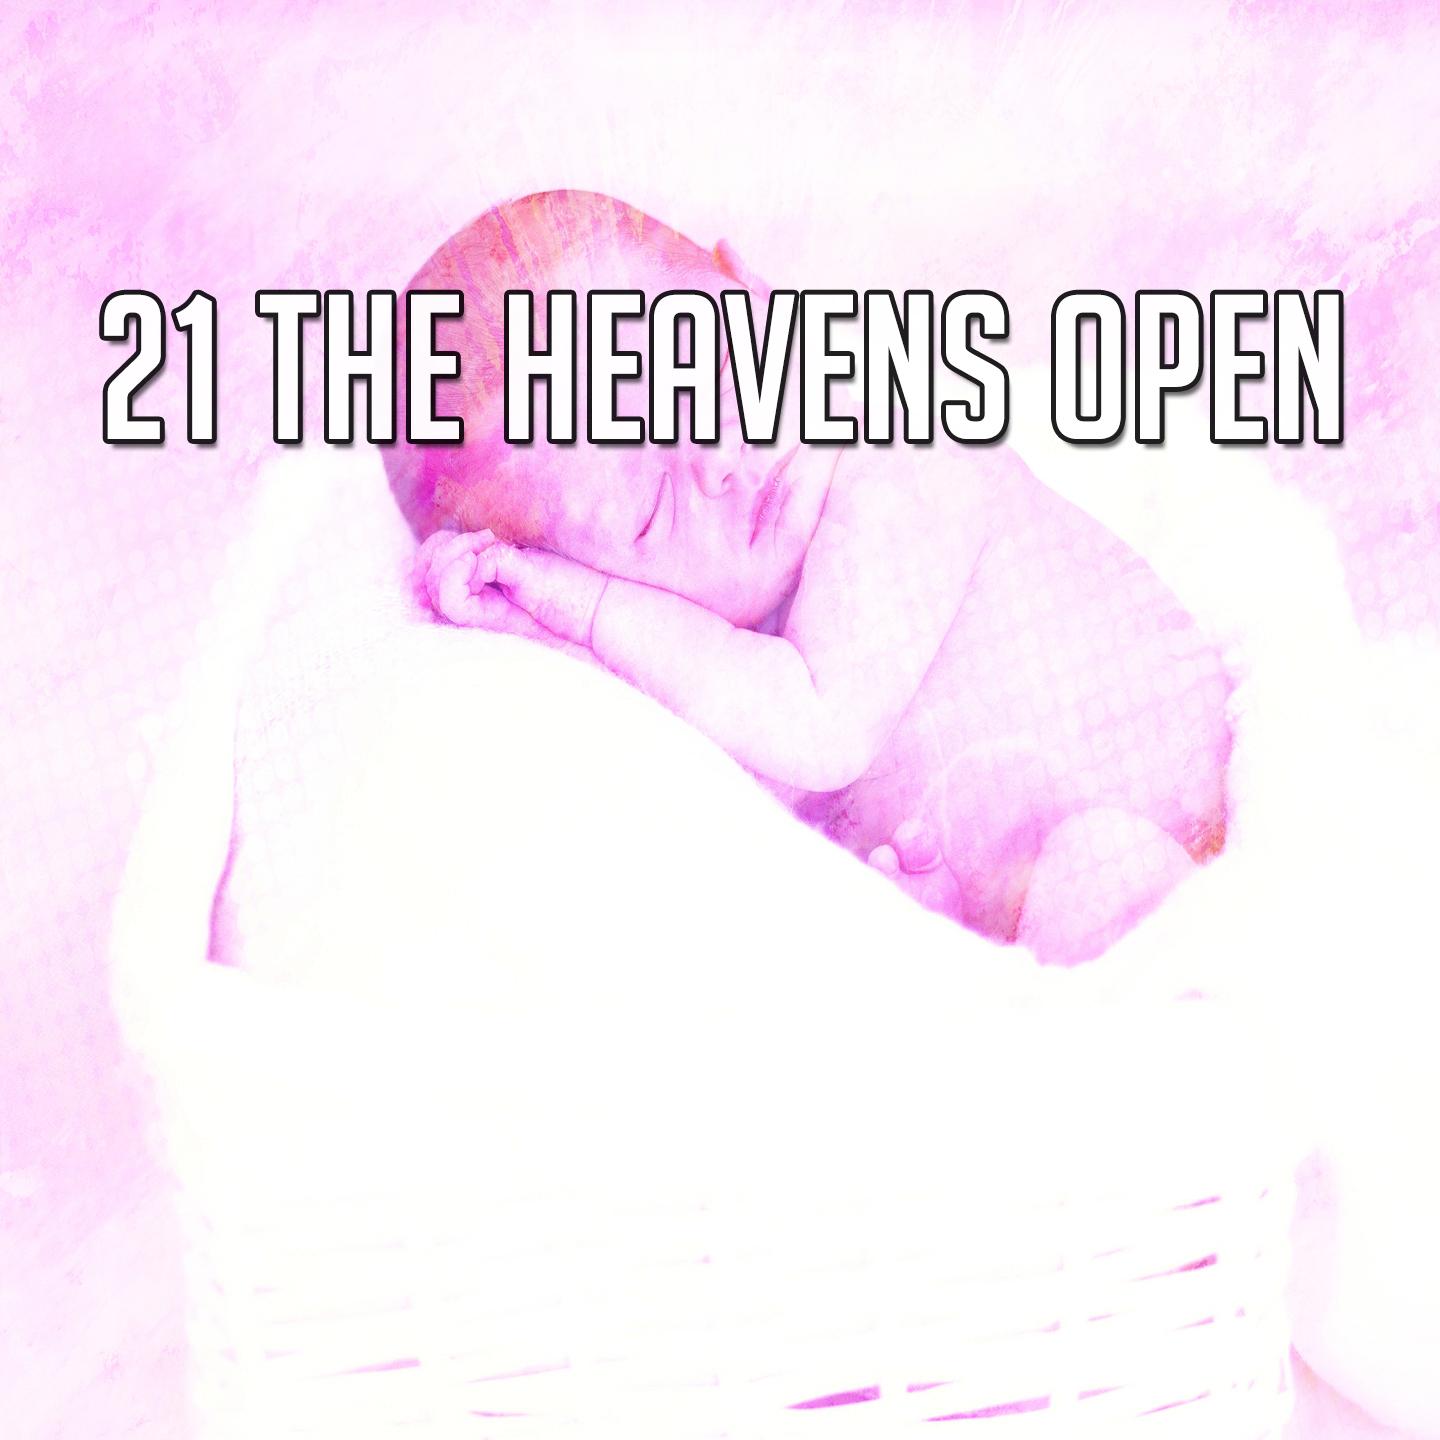 21 The Heavens Open